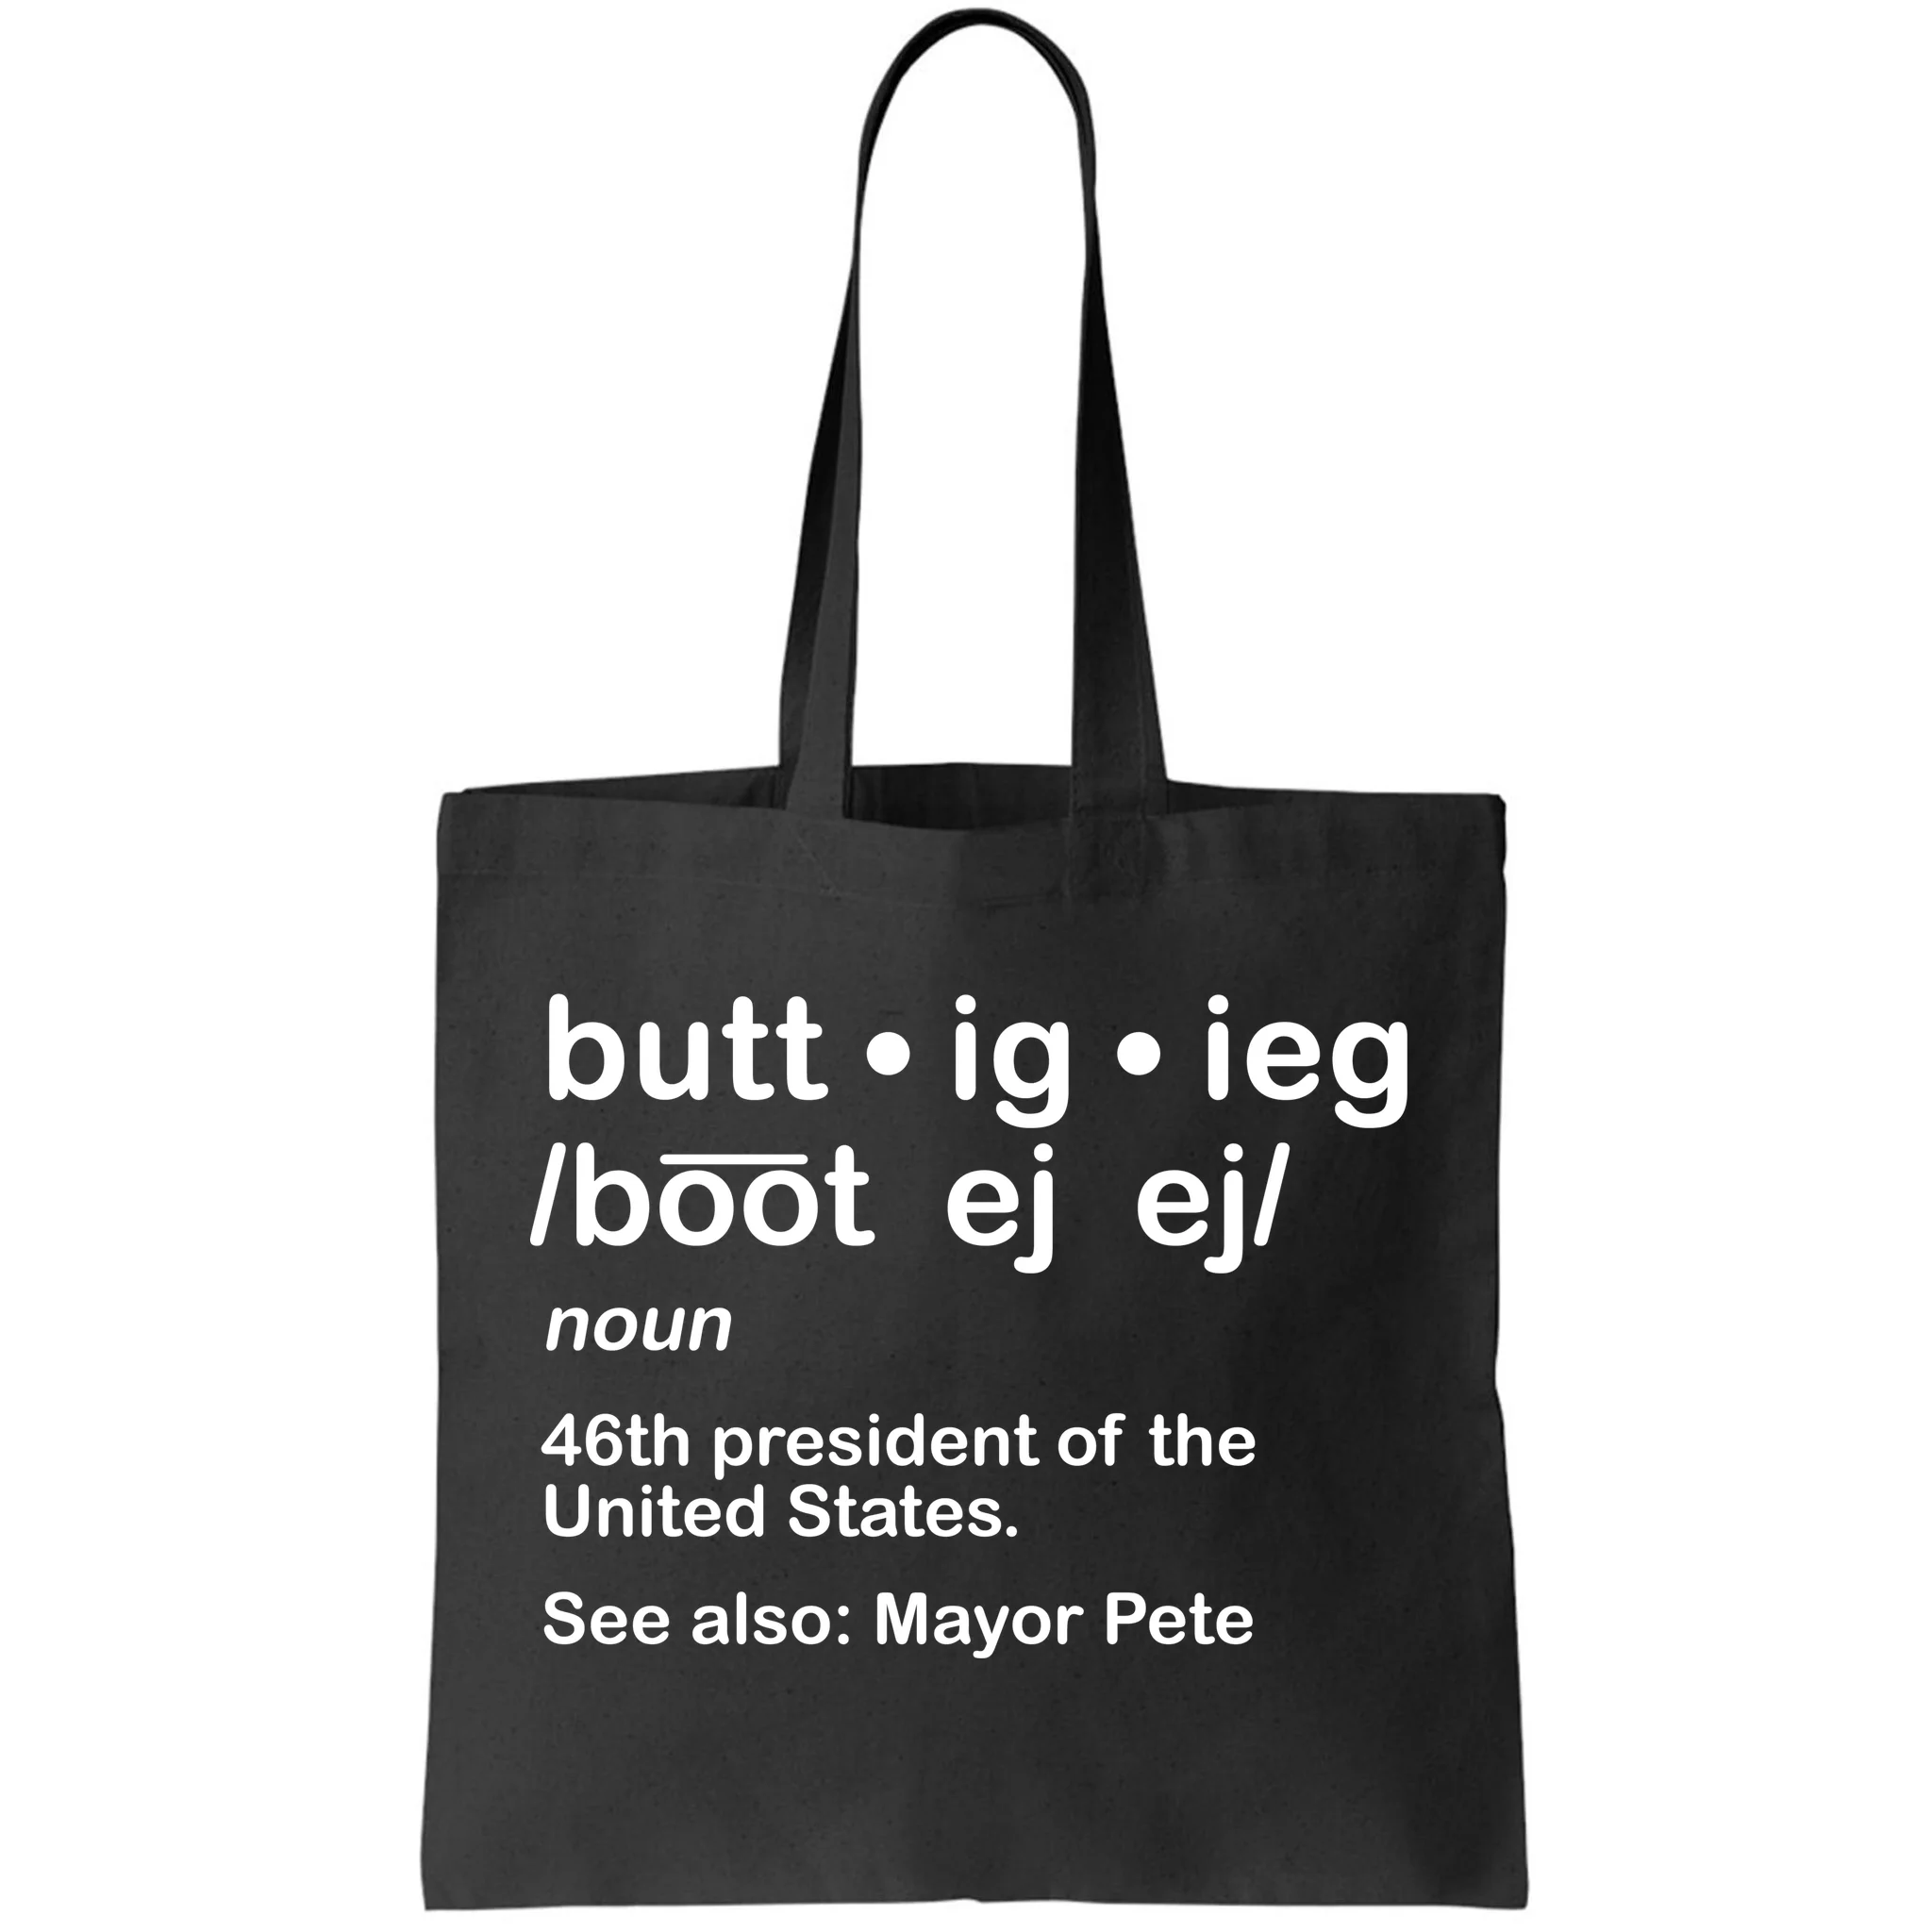 Cute Funny Saying Design #270 Tote Bag by Ferdinand Pulutan - Pixels